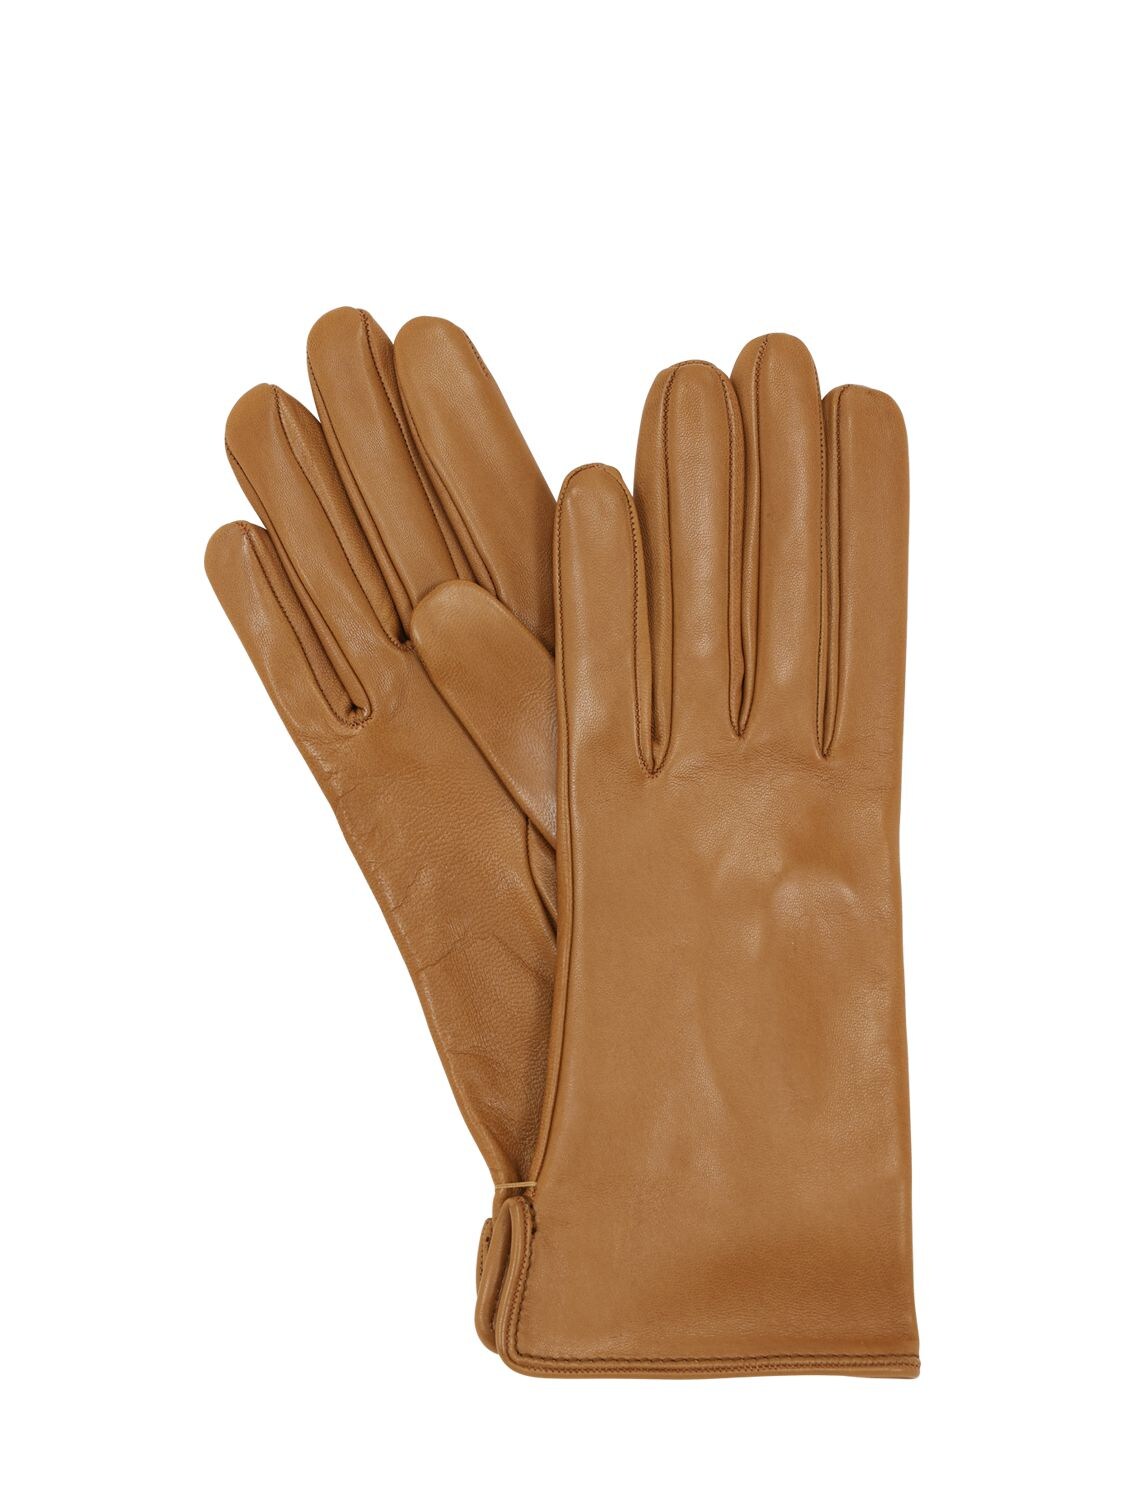 Mario Portolano Nappa Leather Gloves In Camel